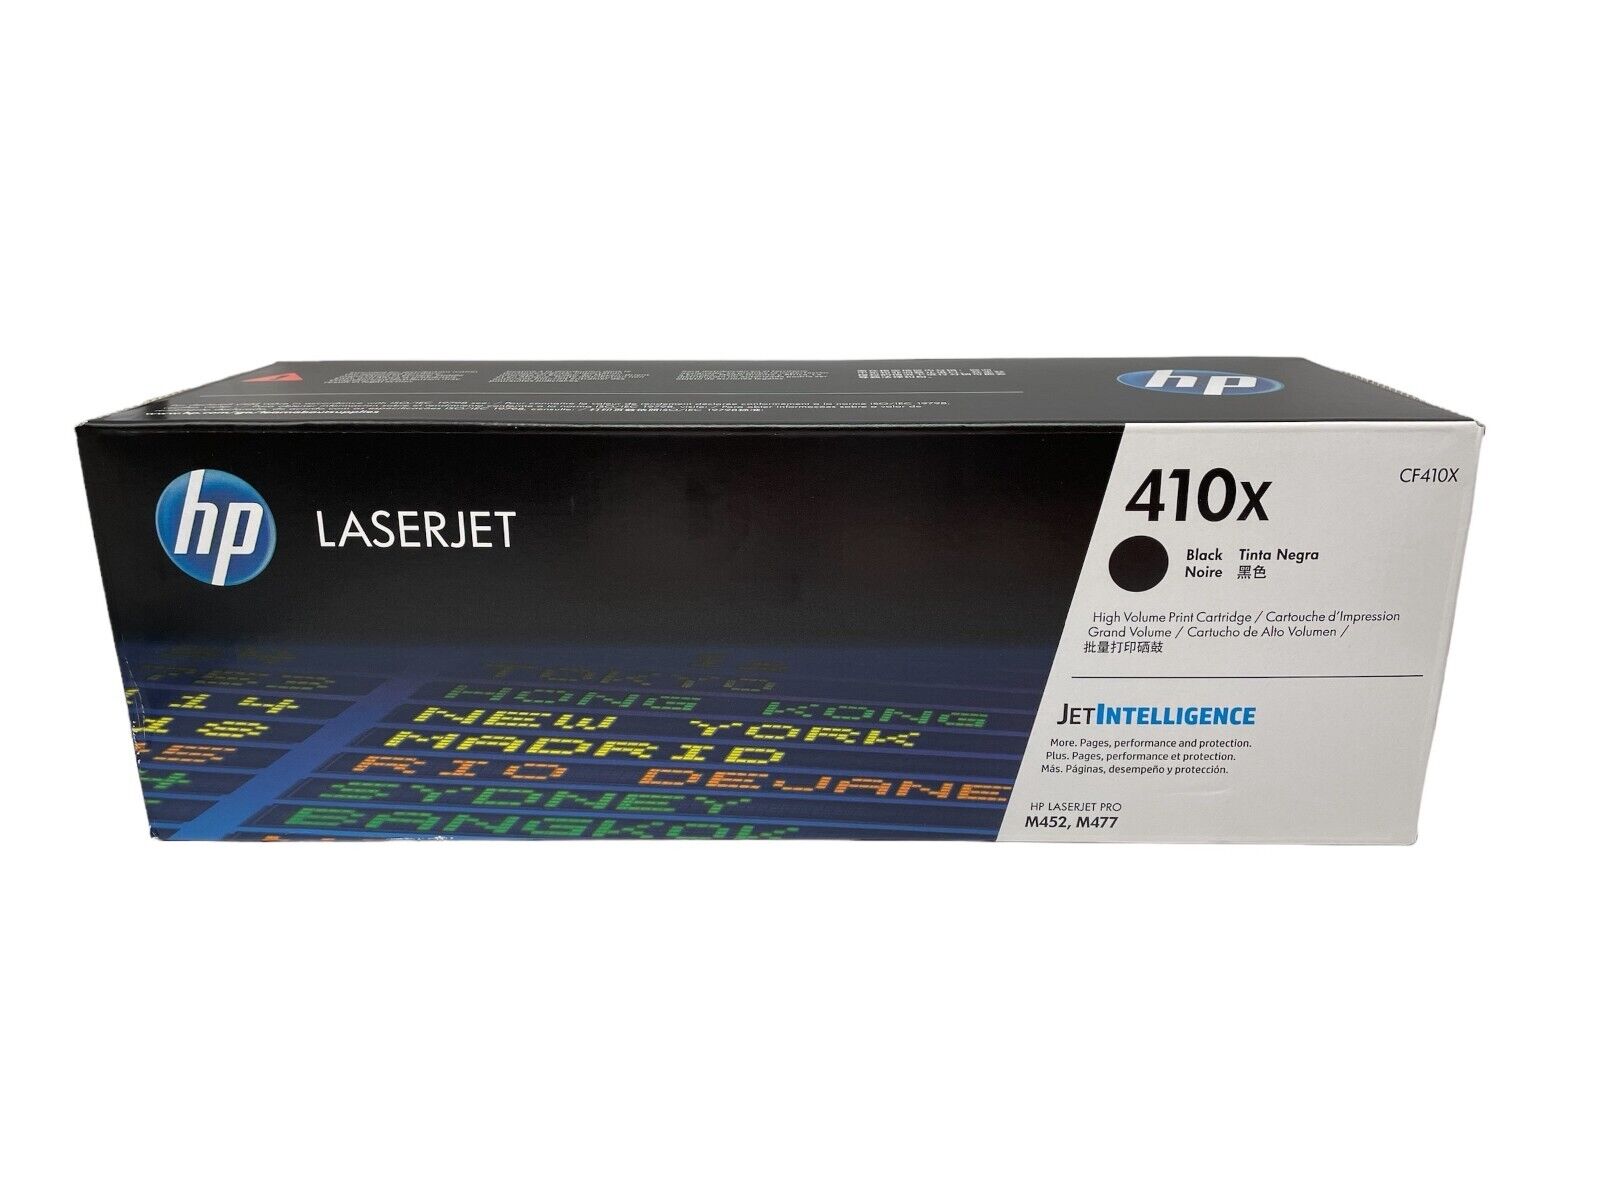 HP 410X CF410X Black Toner Cartridge Brand New Sealed Retail Box CF410X Genuine